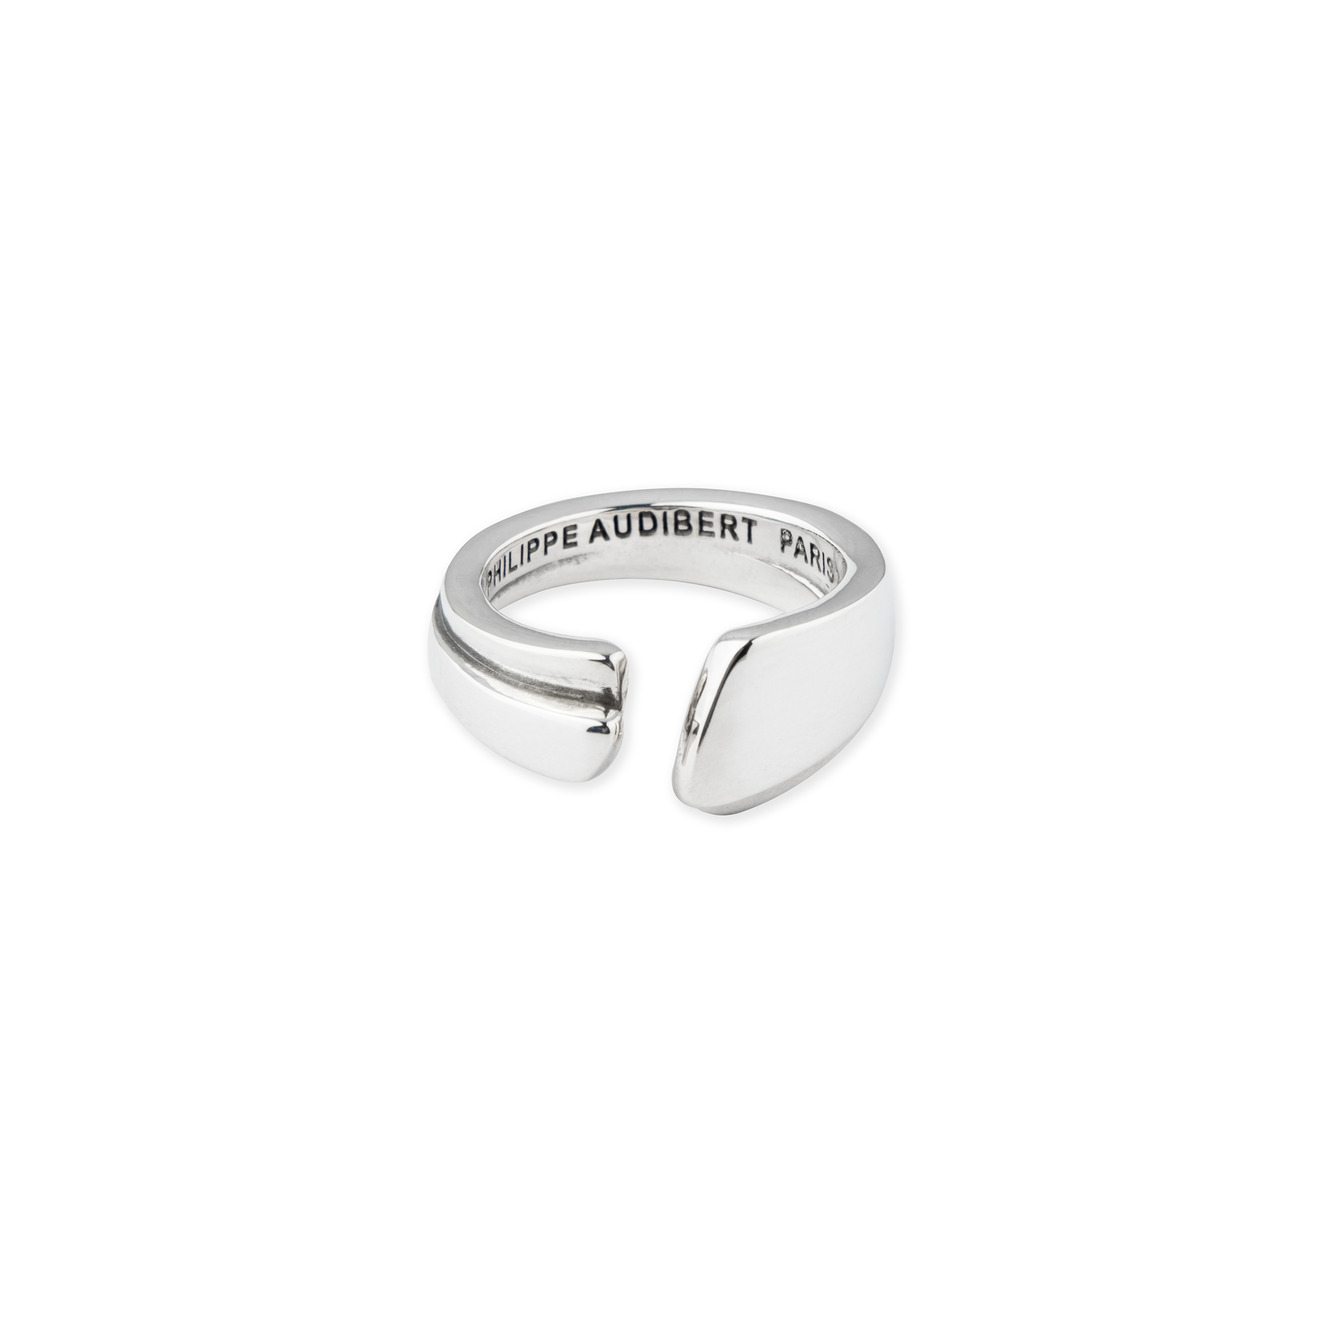 Philippe Audibert Кольцо Etena ring bress с серебряным покрытием philippe audibert кольцо neal ring с серебряным покрытием